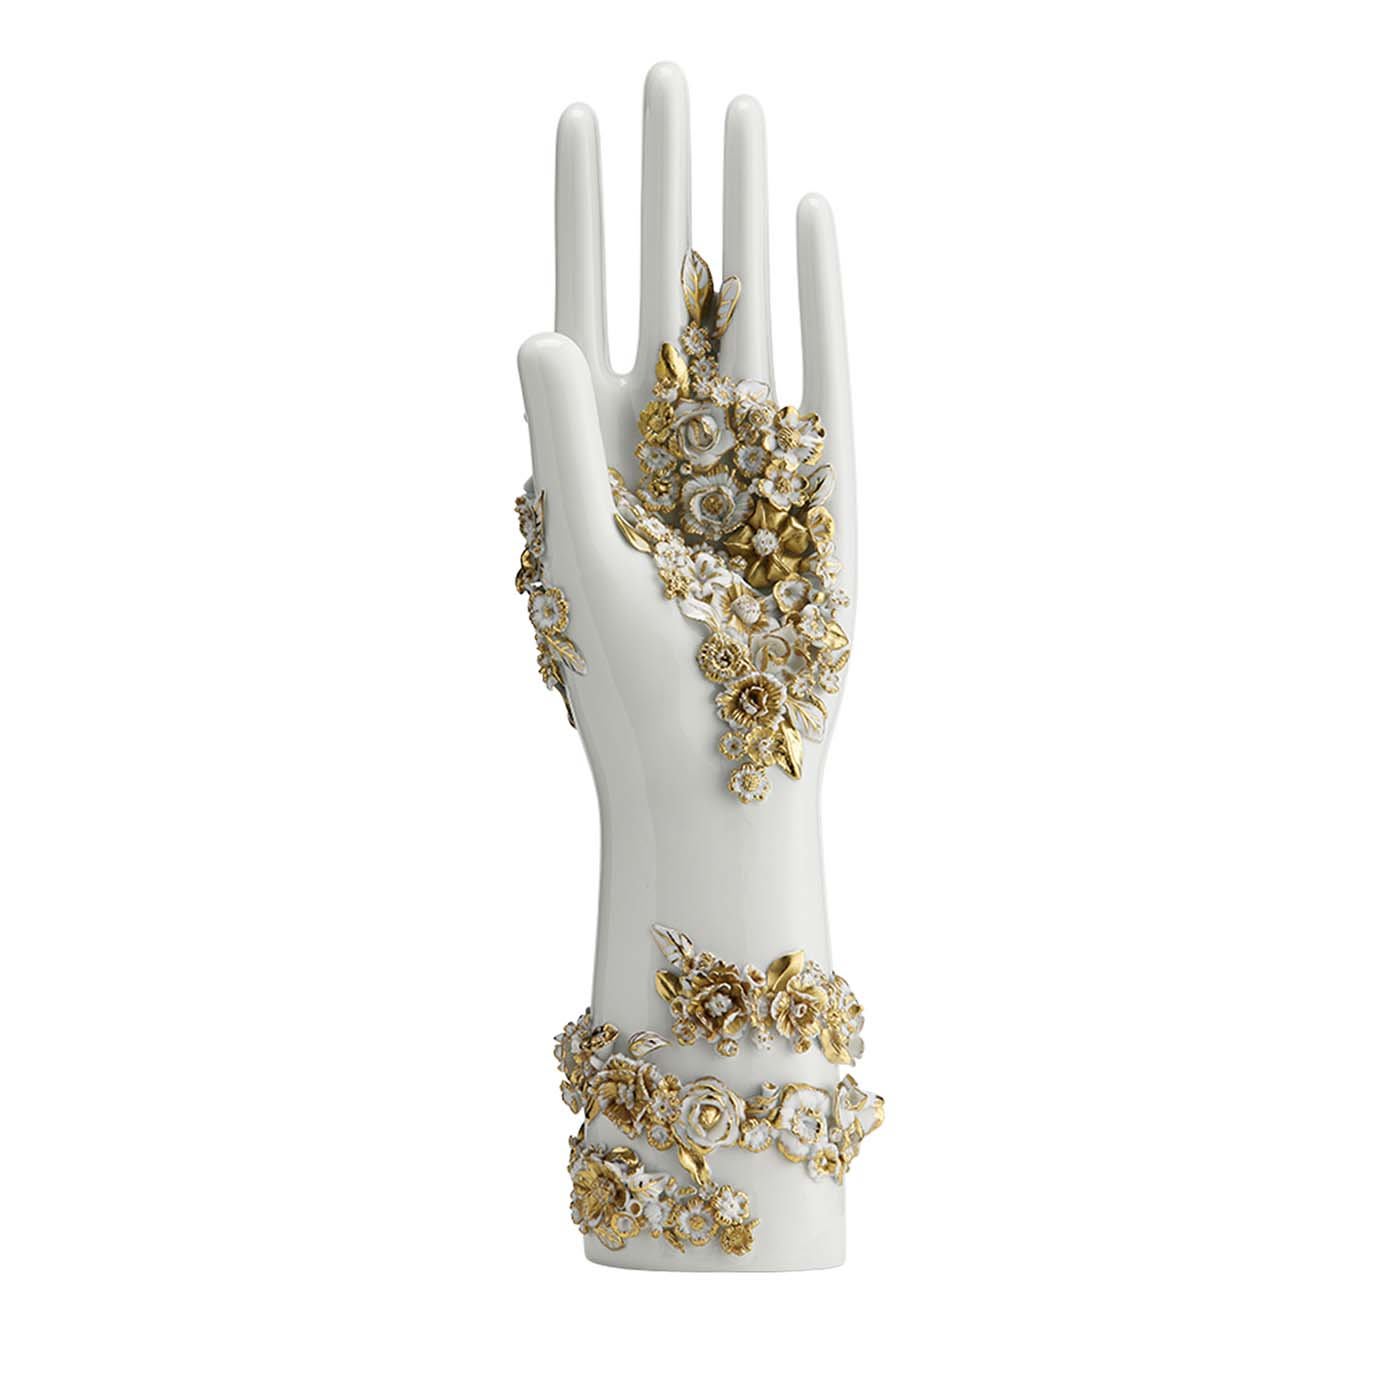 Mano Fiorata Decorative Hand with Gold - Limited Edition by Gio Ponti - GINORI 1735